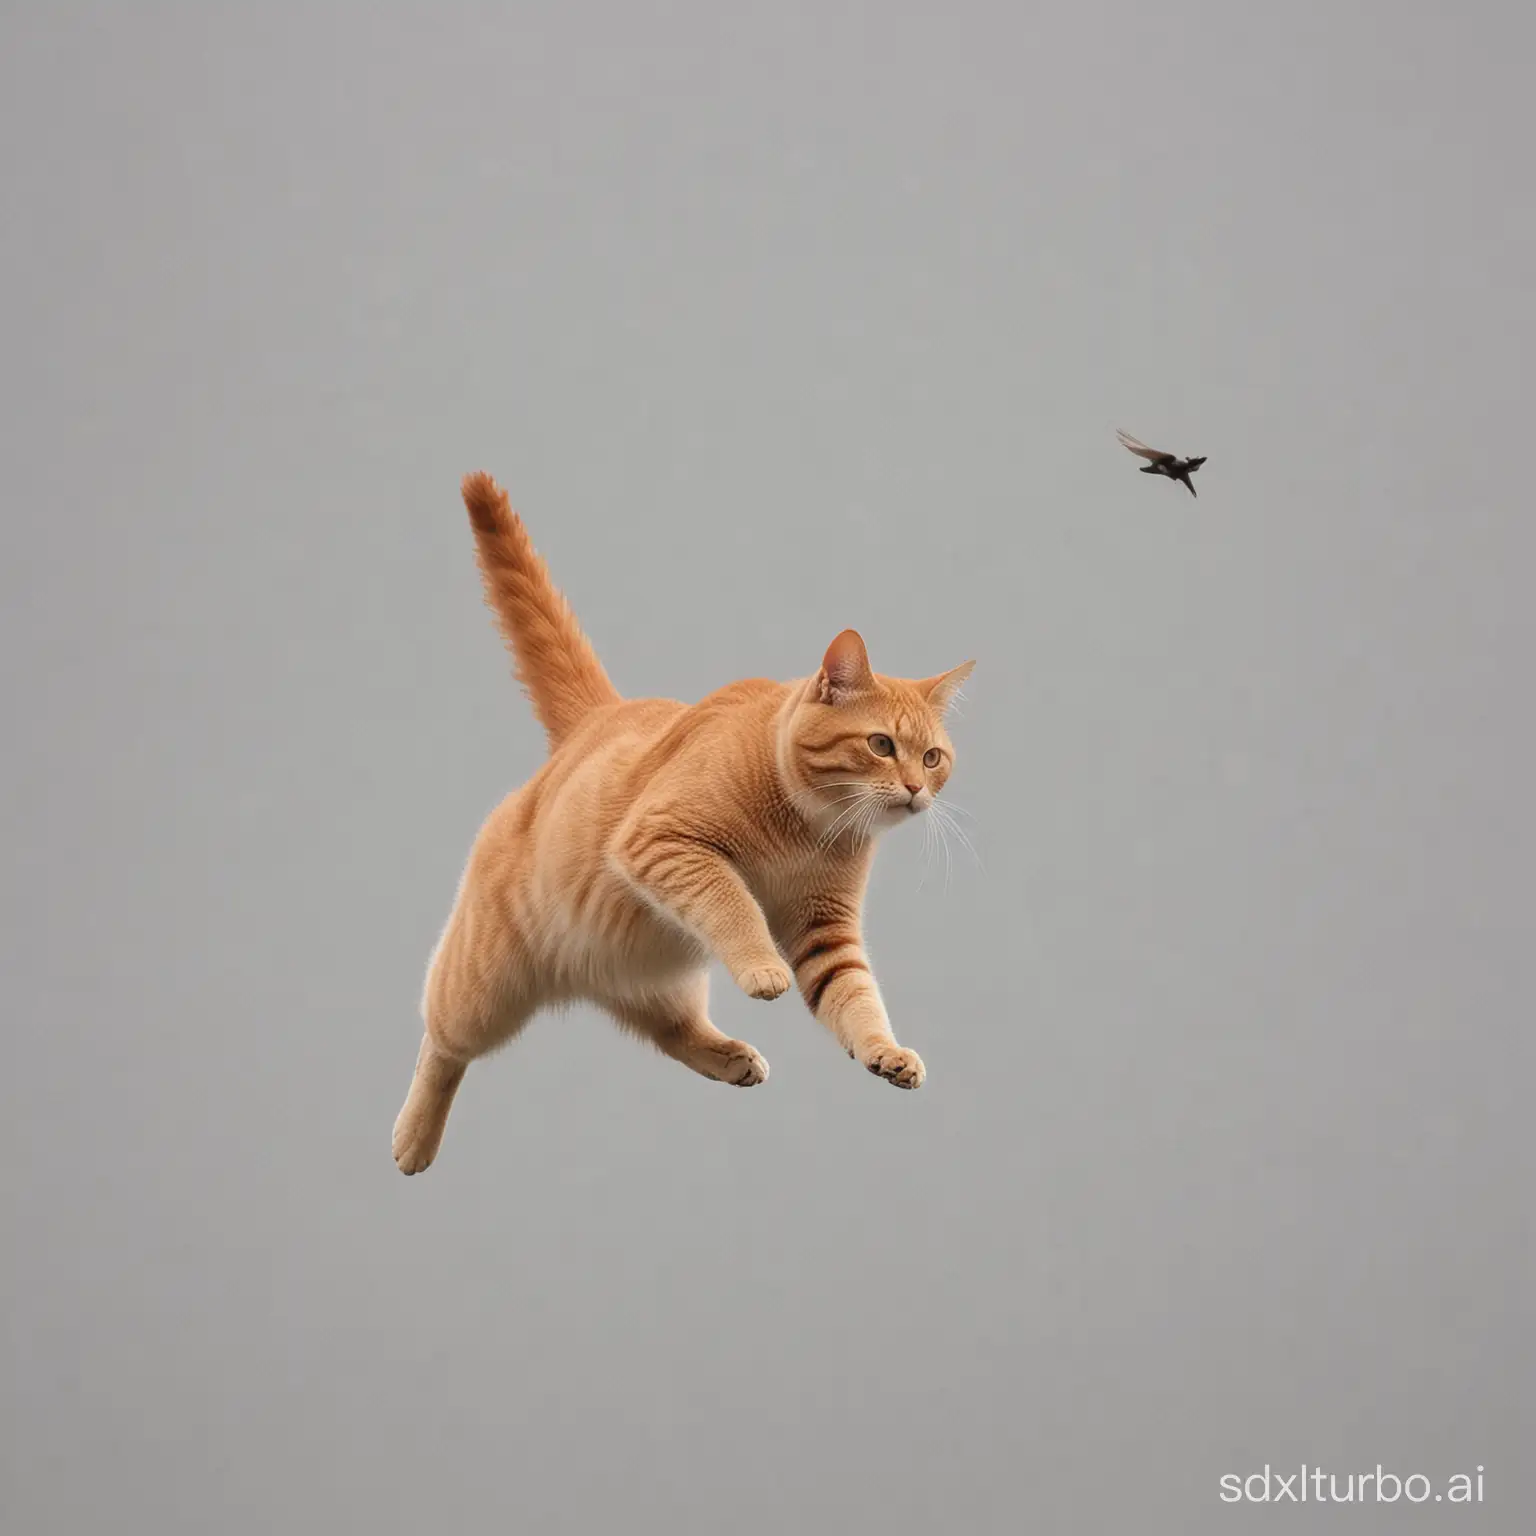 a flying cat